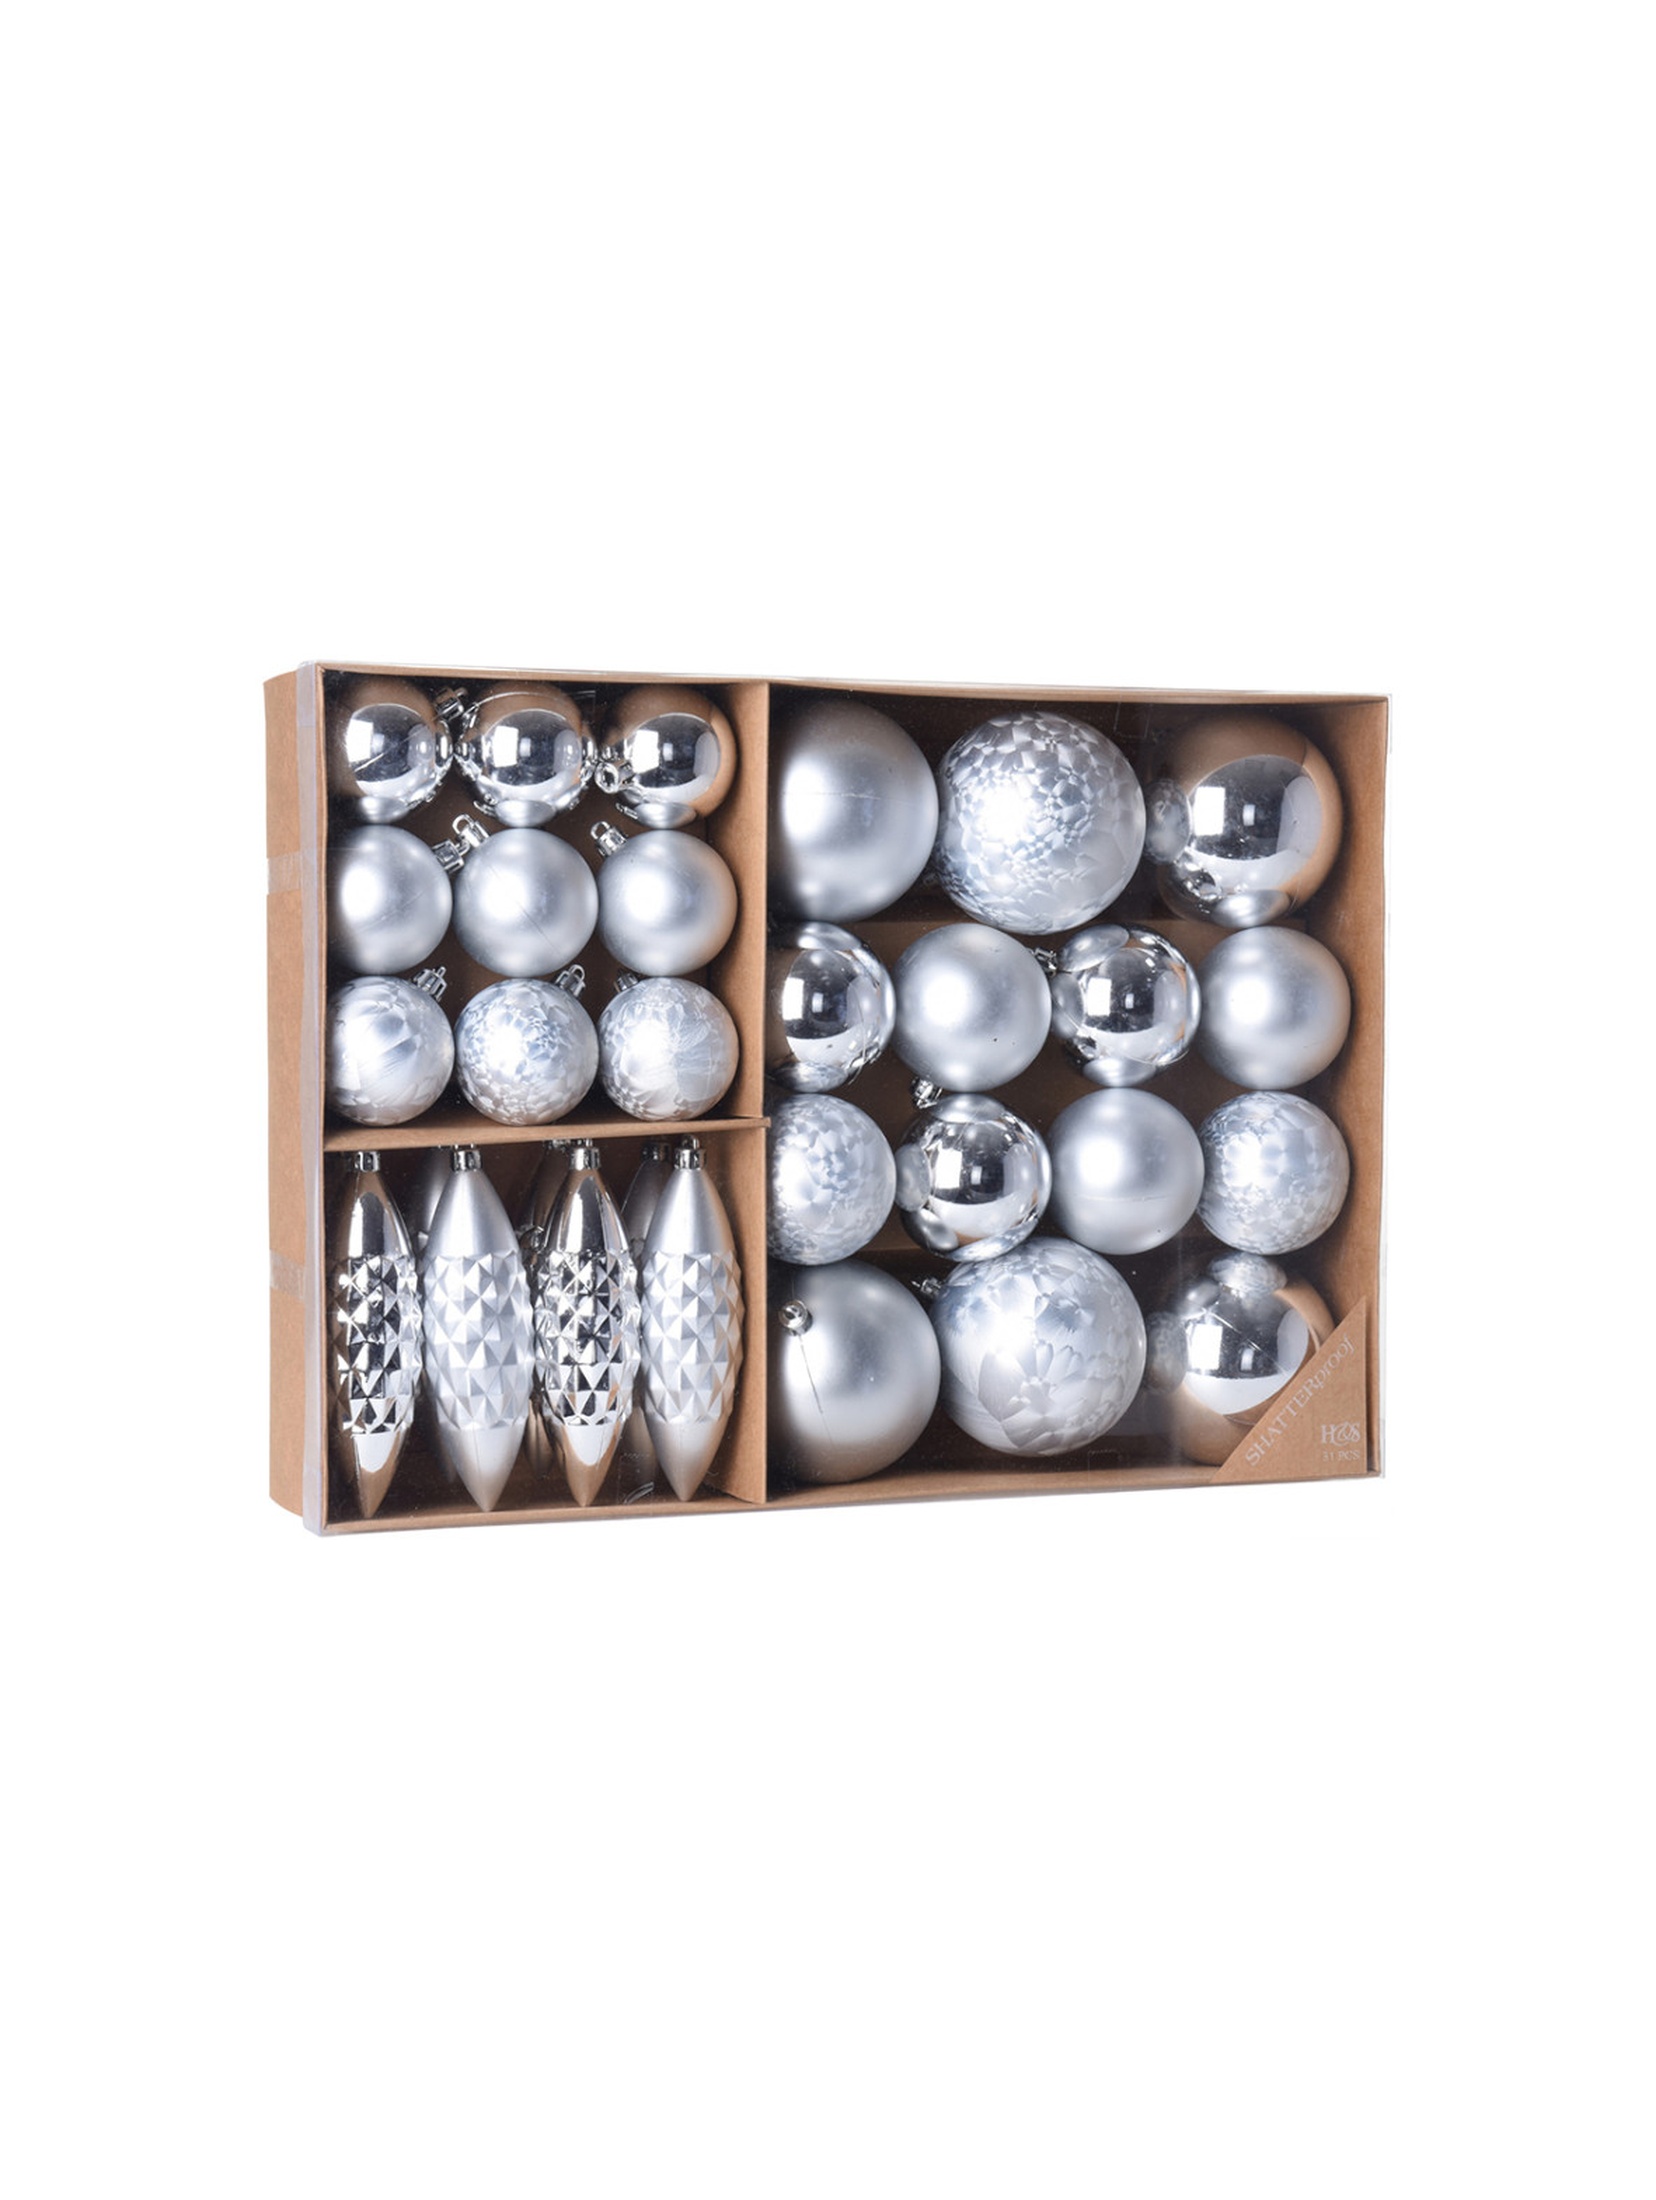 Bombki świąteczne plastikowe 31 sztuki  srebrne